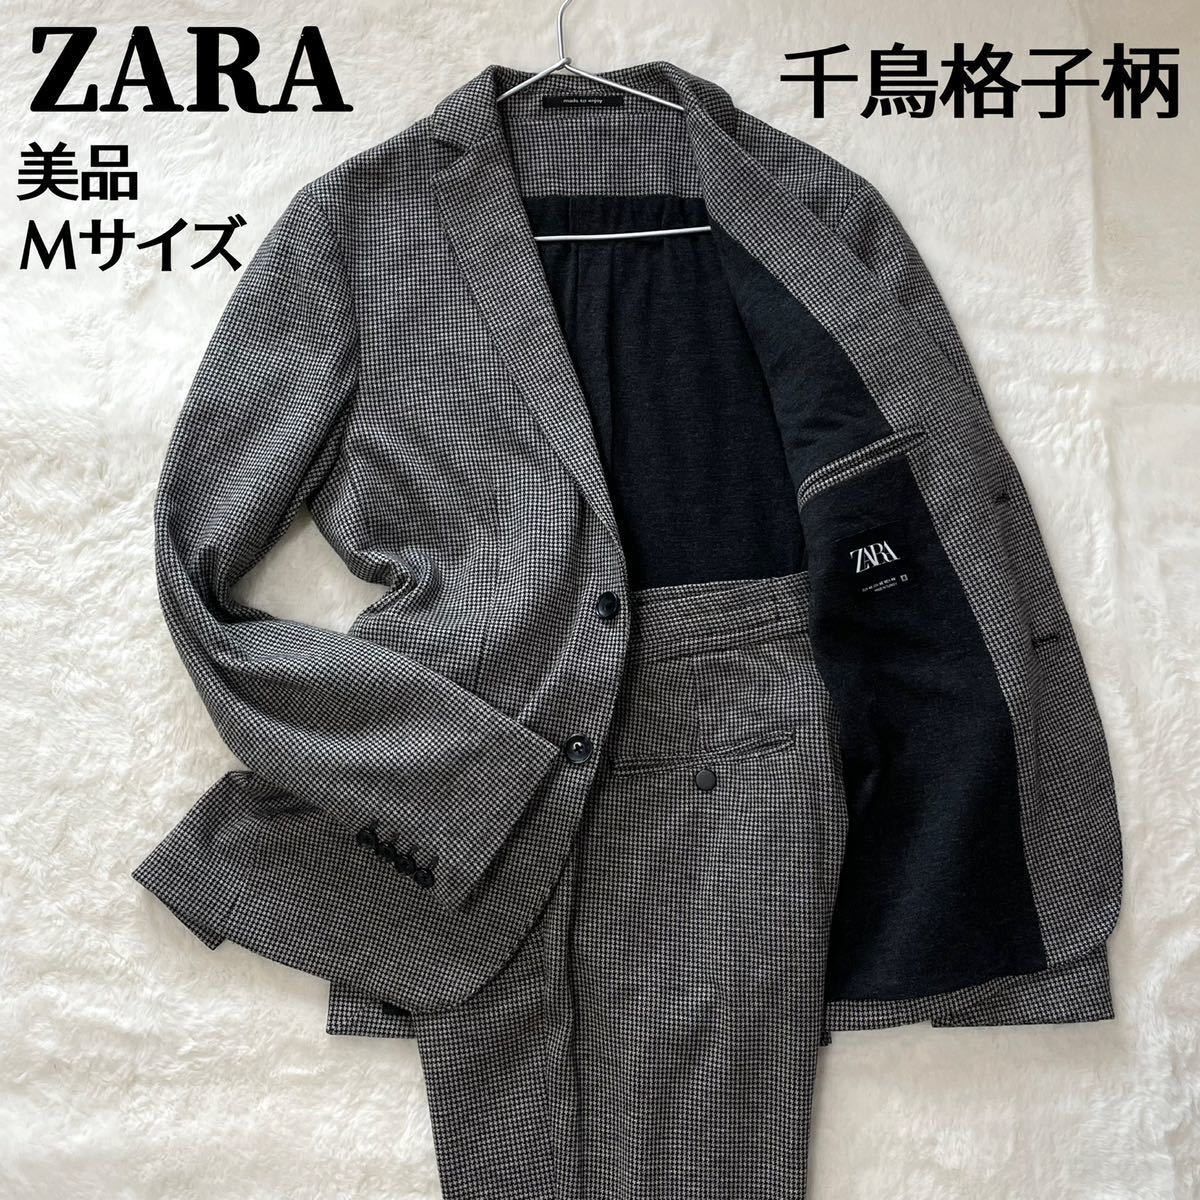 Yahoo!オークション -「zara スーツ メンズ」(スーツ) (メンズ